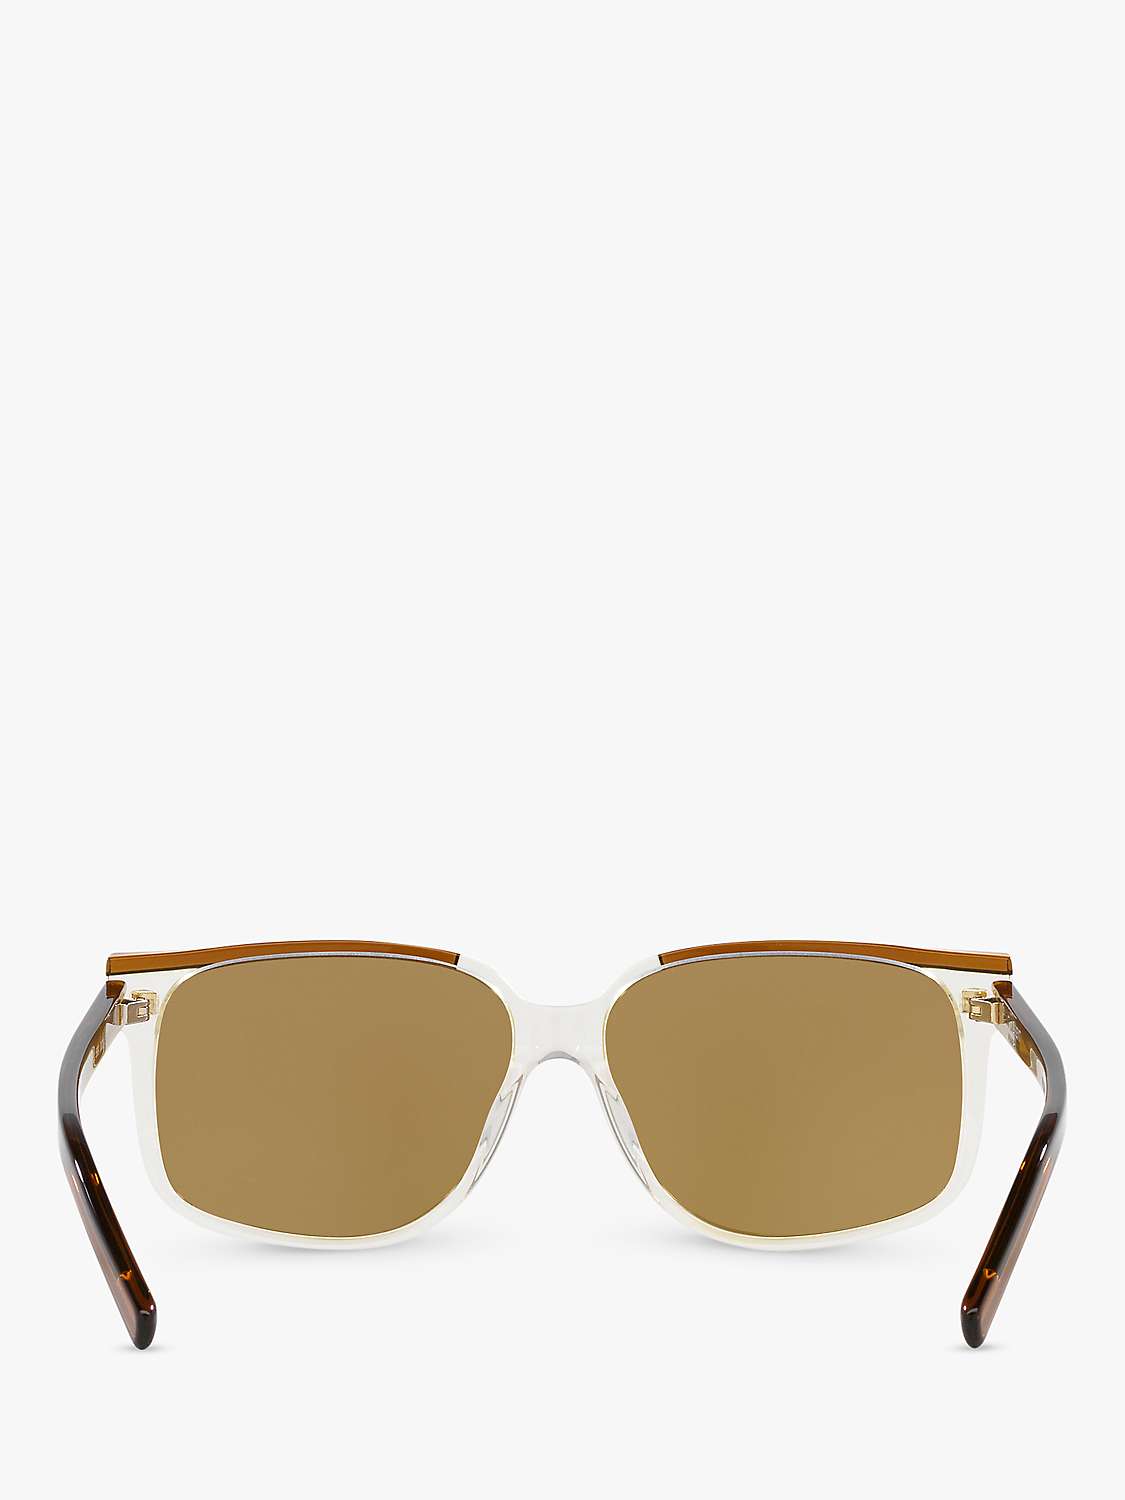 Buy Yves Saint Laurent YS000476 Men's Square Sunglasses, Brown/Brown Online at johnlewis.com